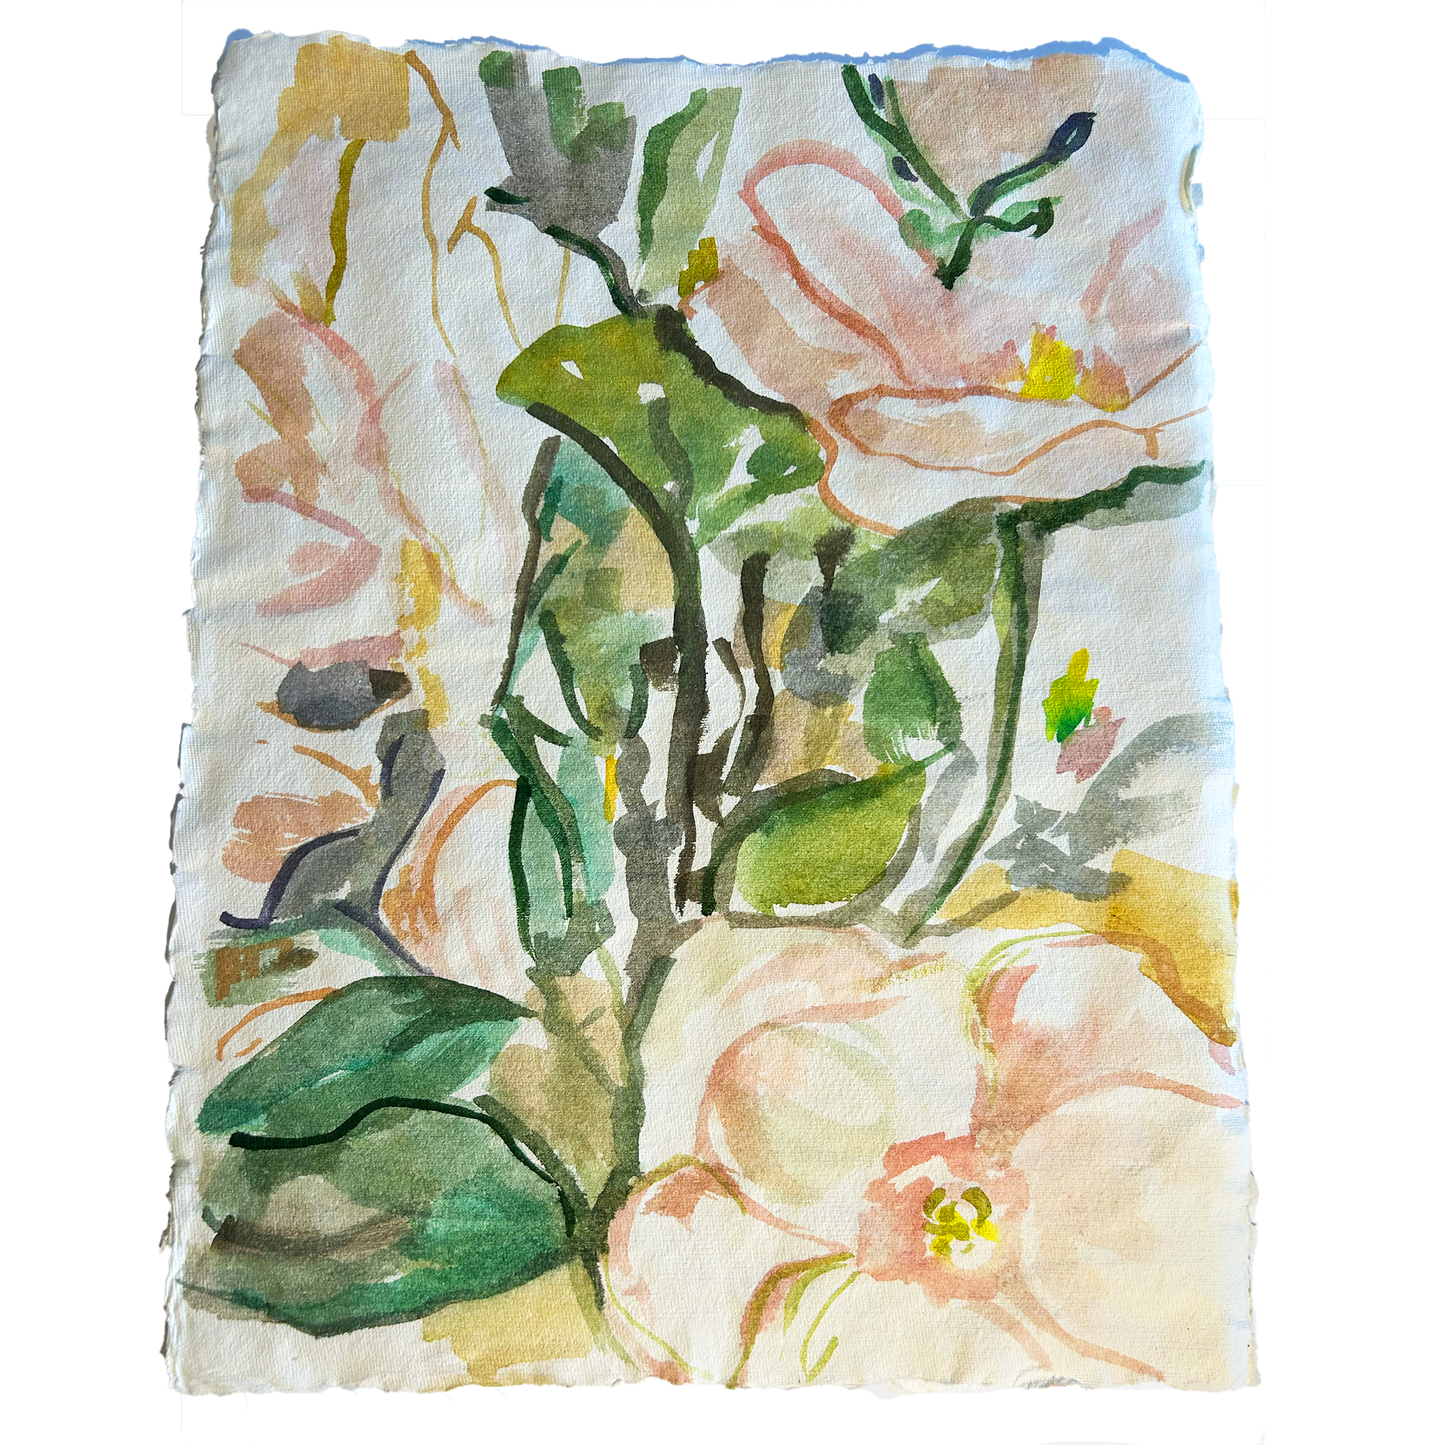 Flower Sketch on Paper #2